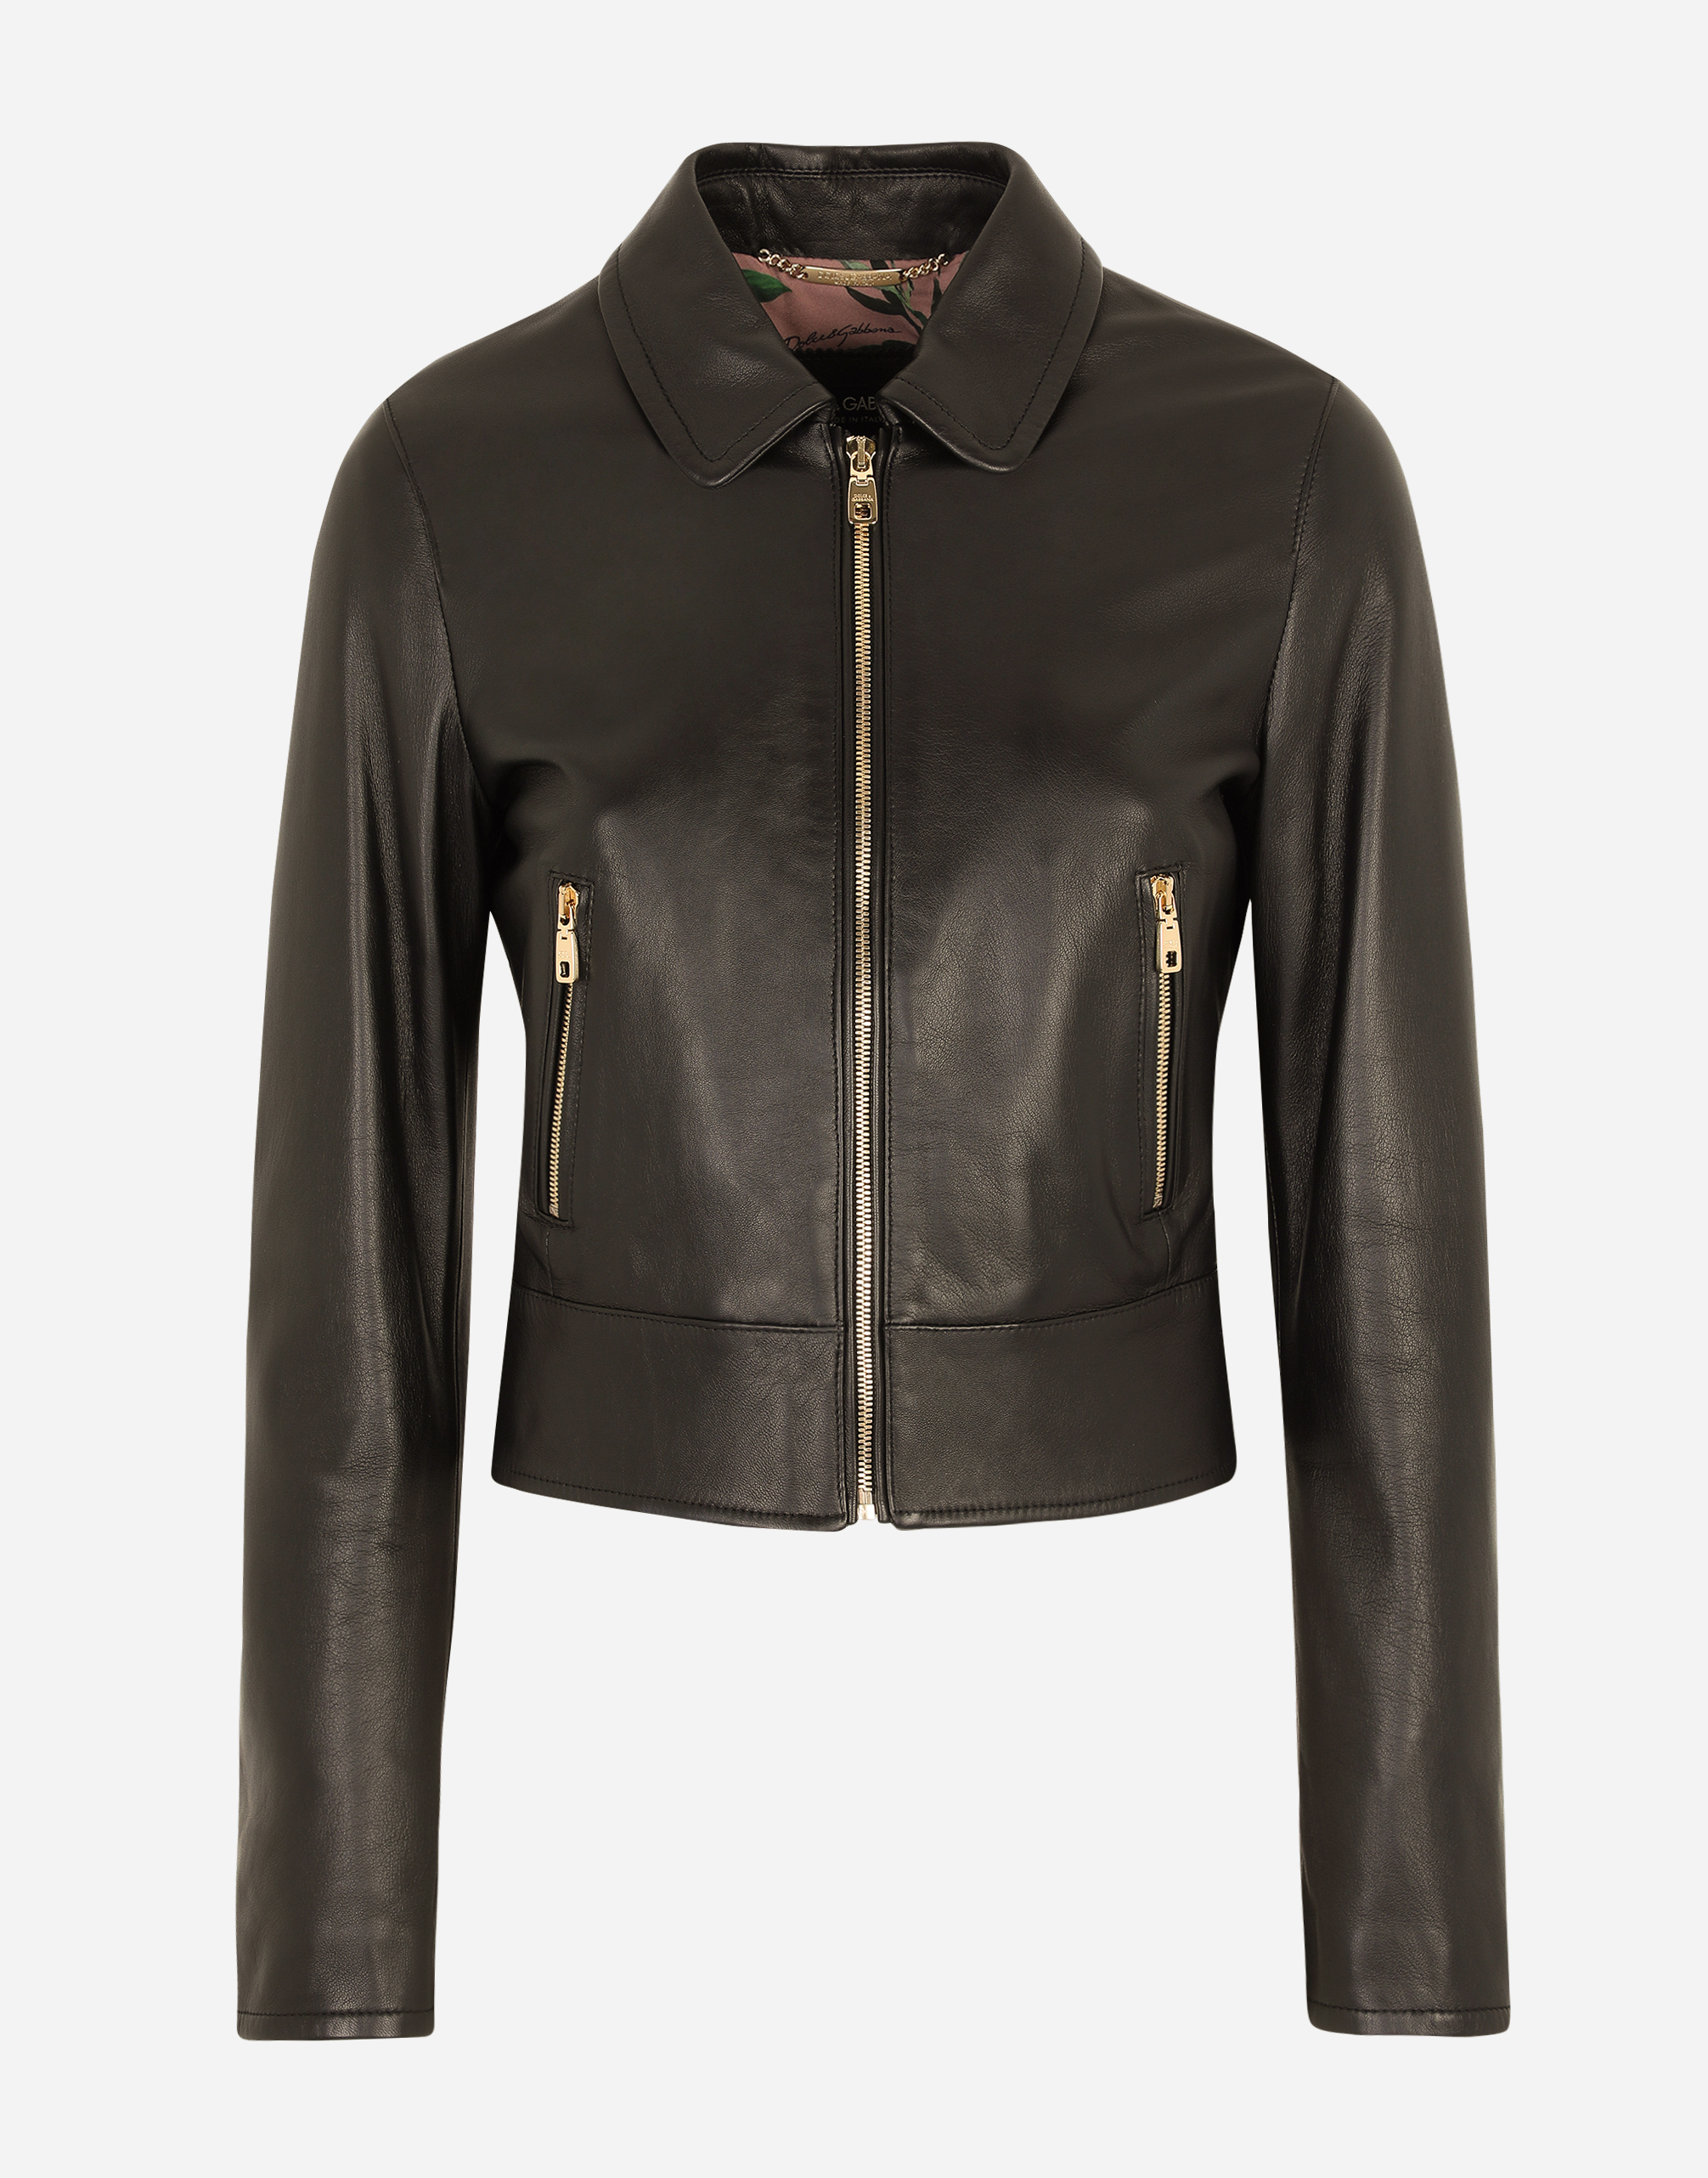 dolce and gabbana black leather jacket